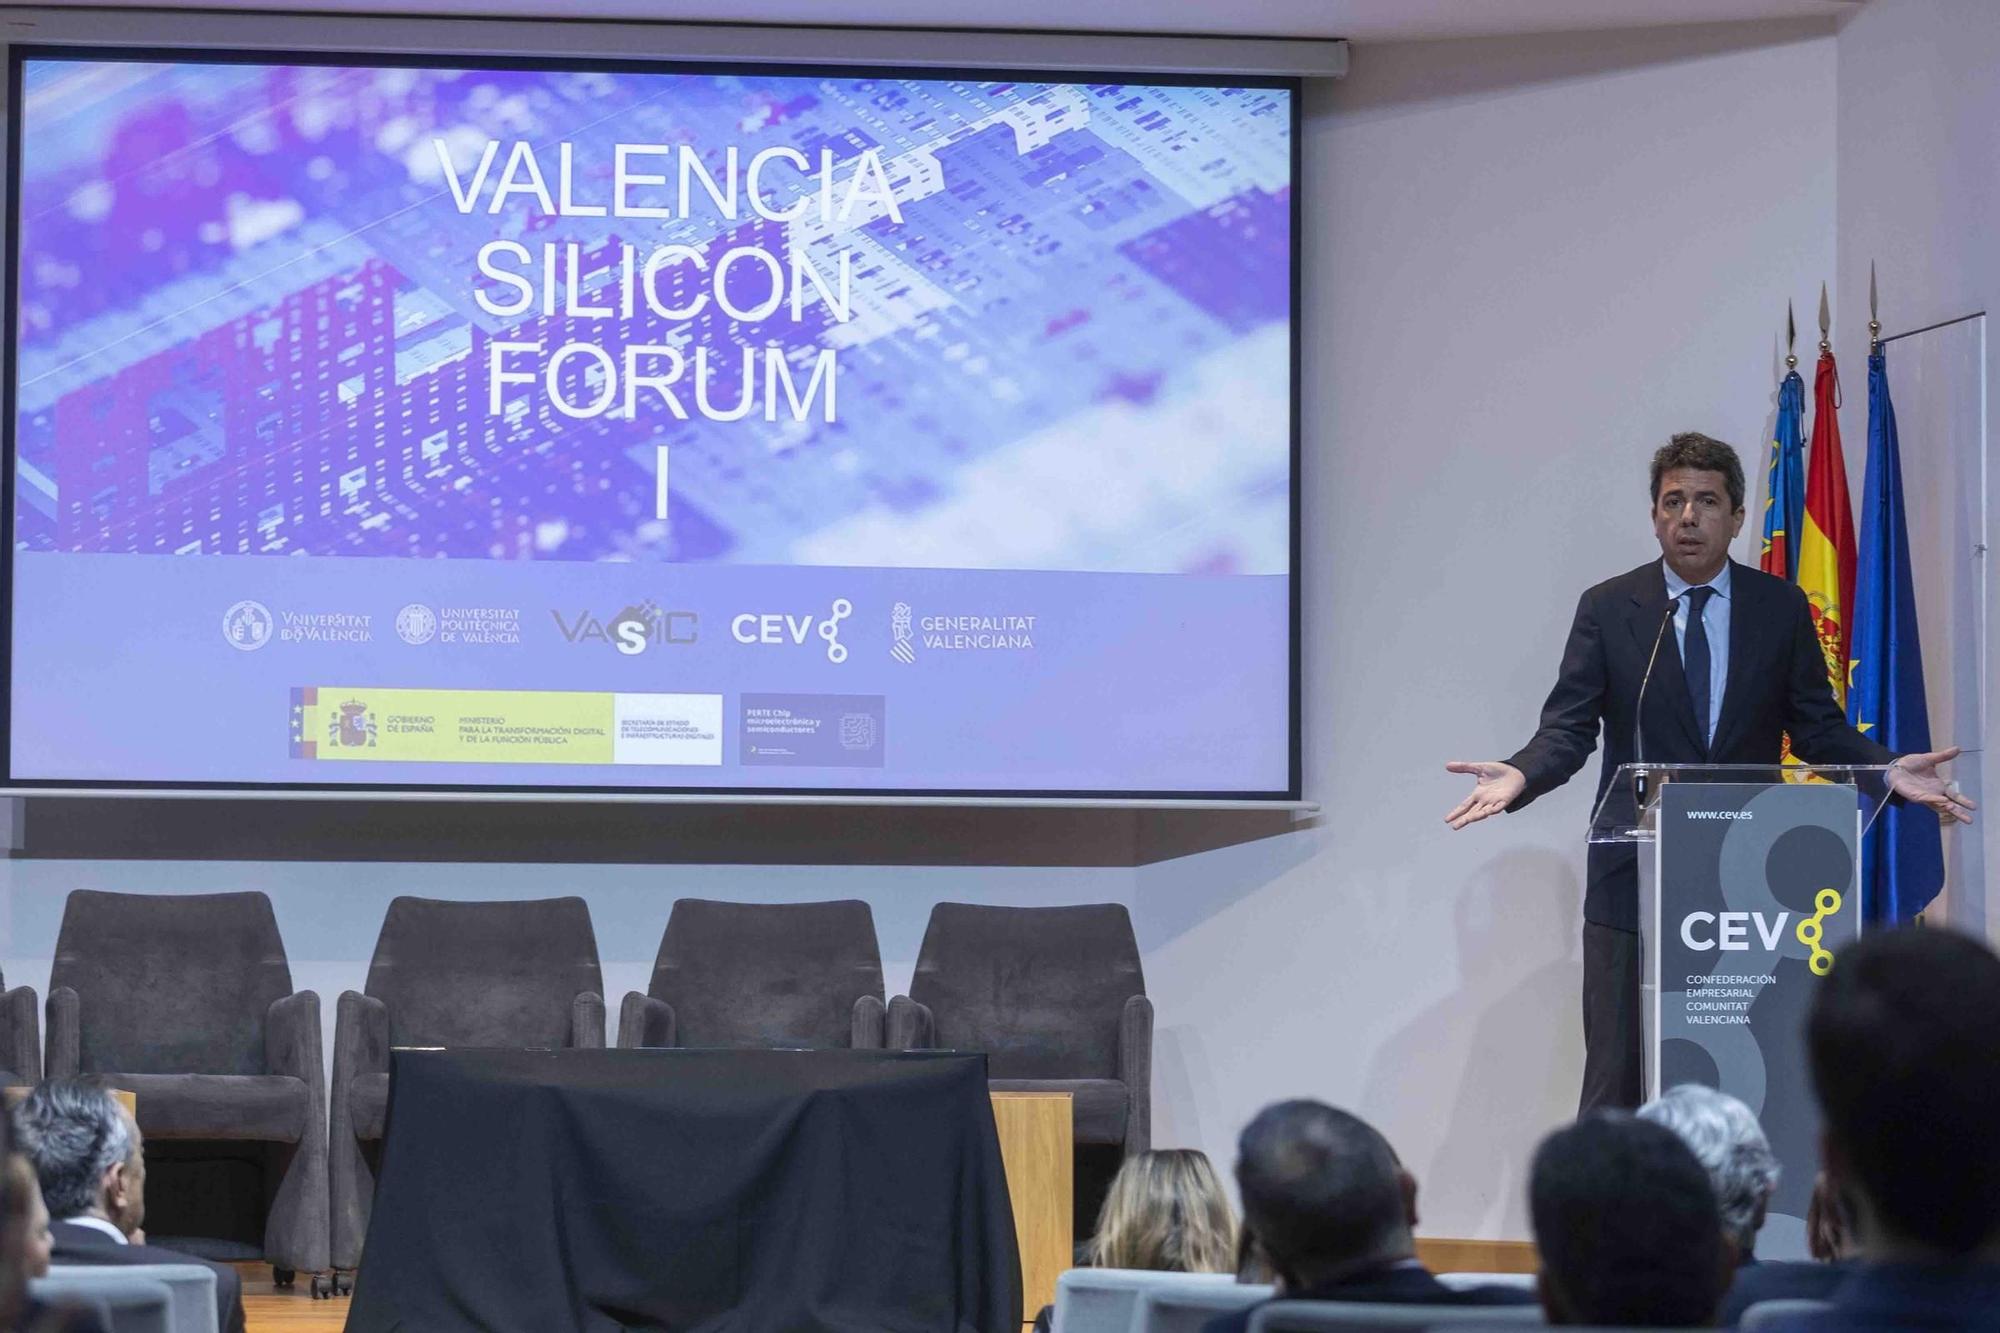 Valencia Silicon Forum